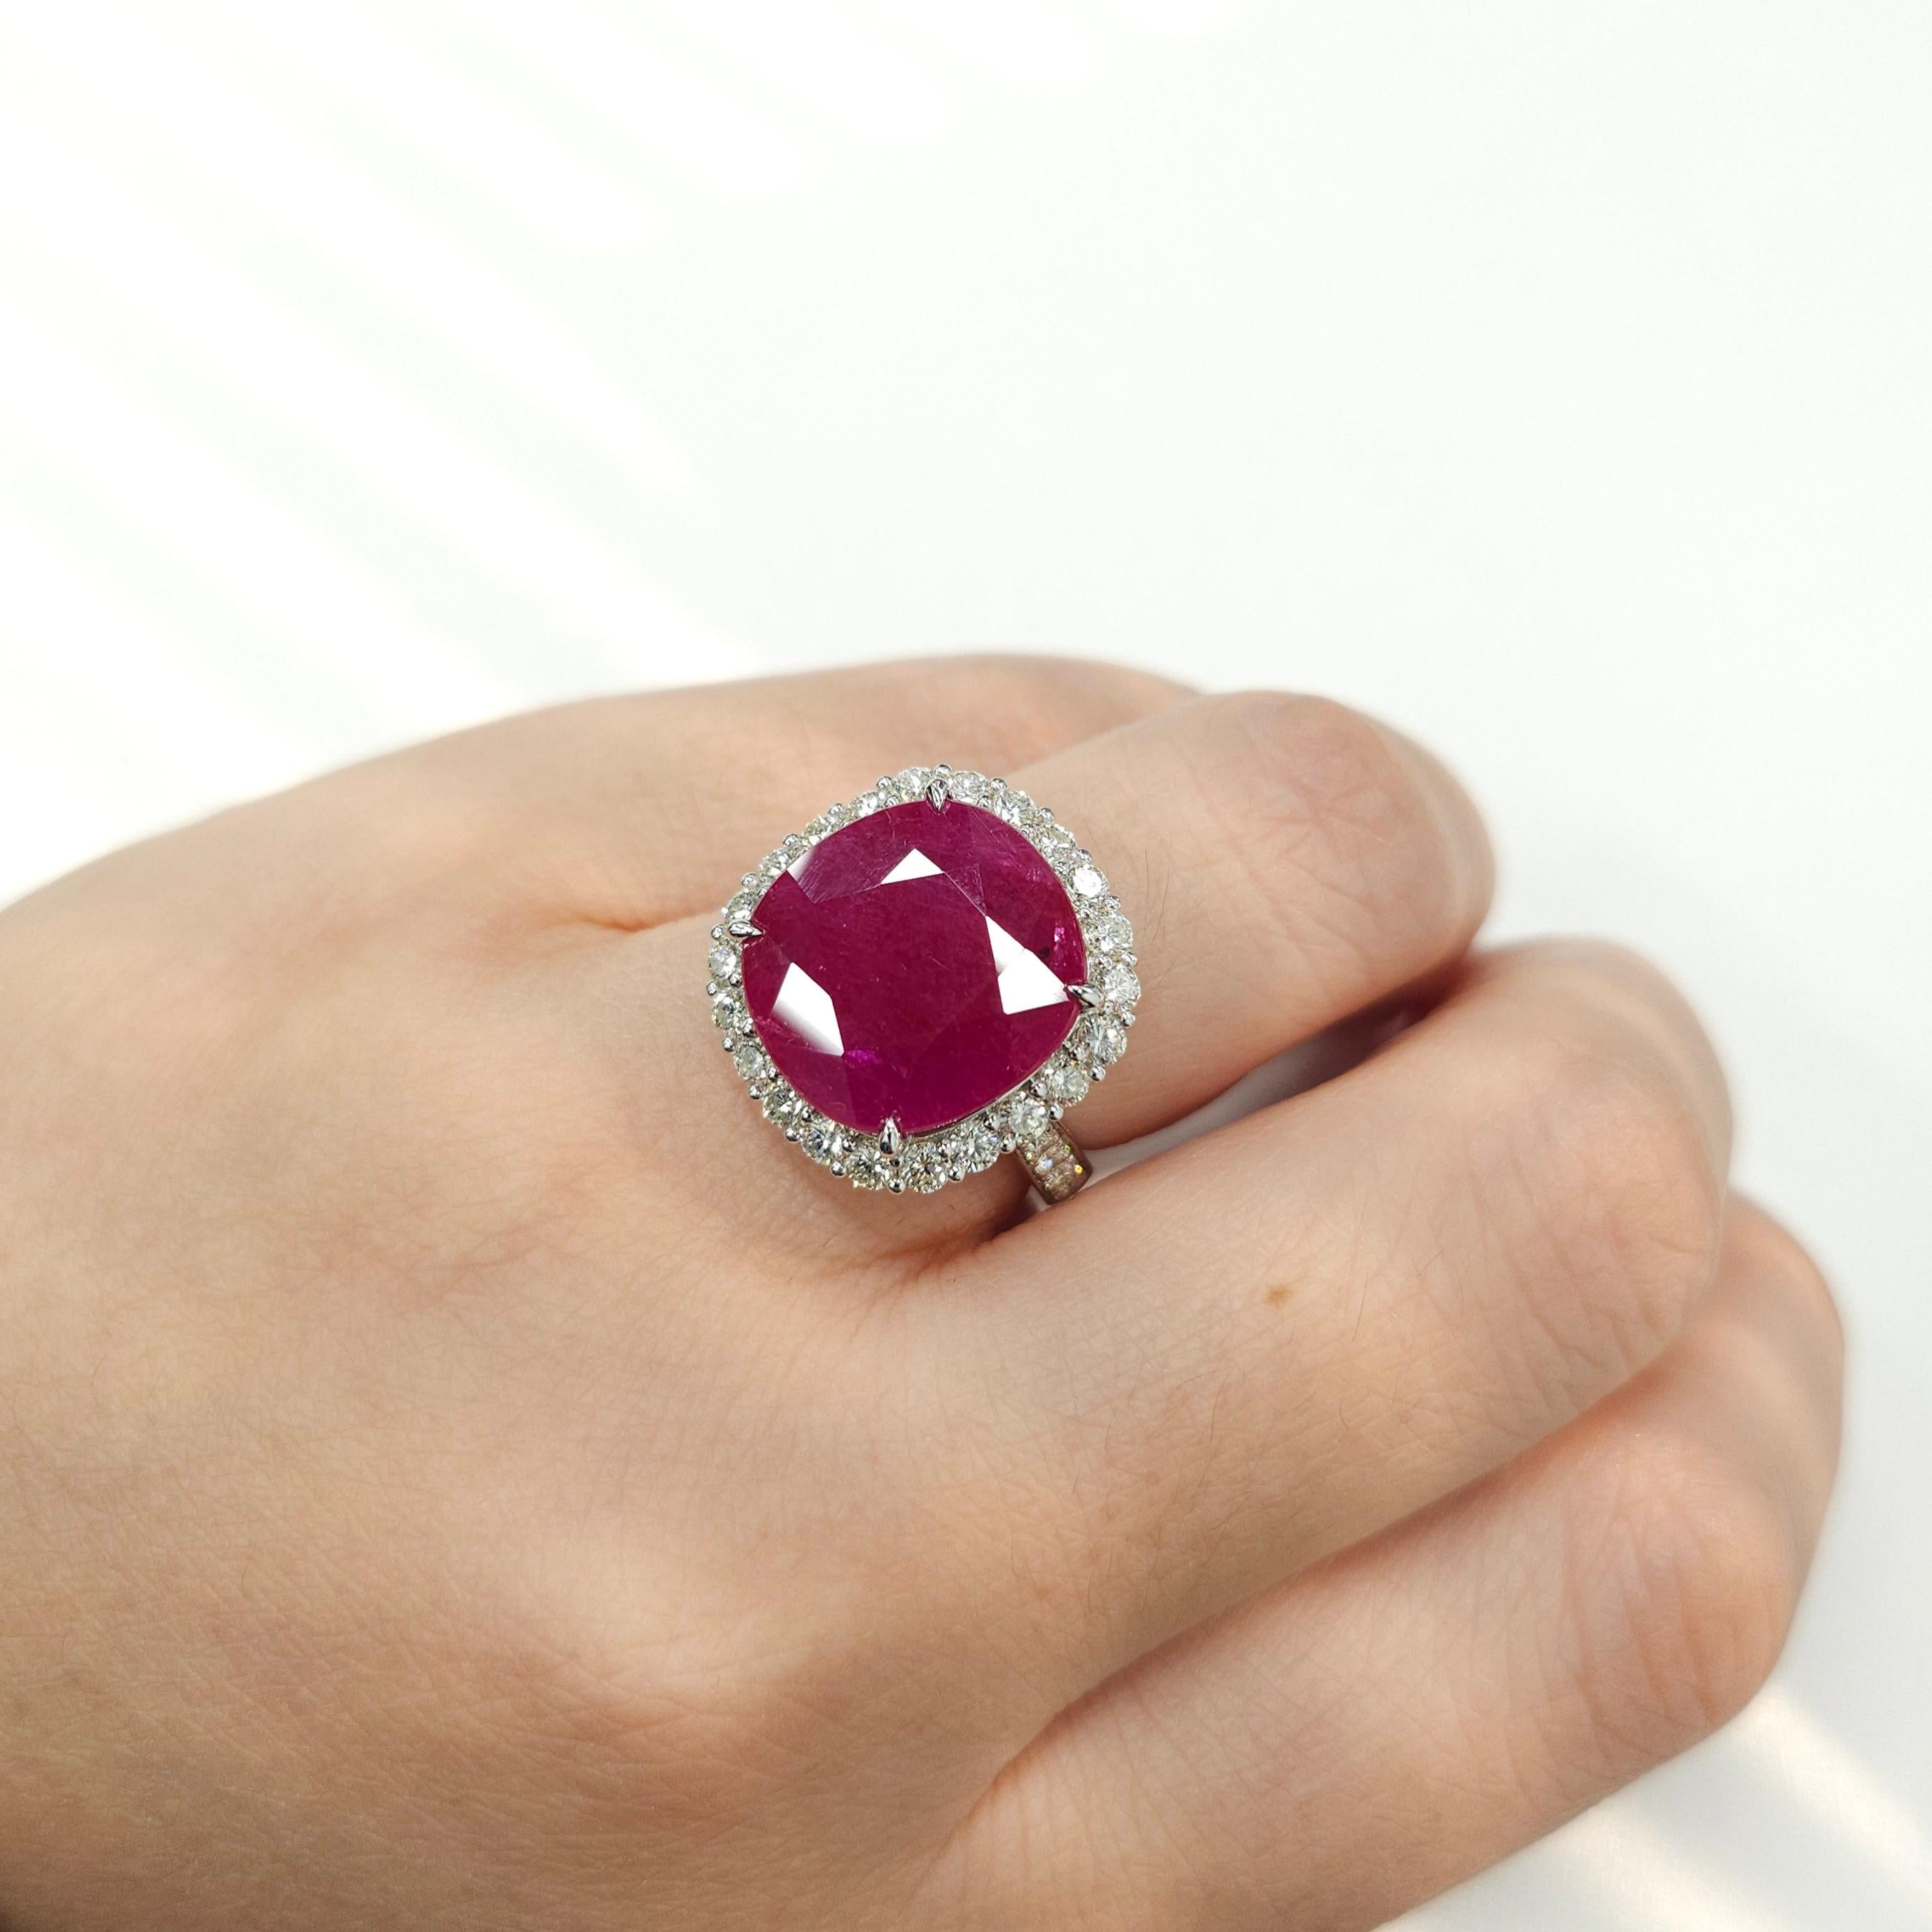 AIG Certified Rare 9.08 Carat Burma Ruby & Diamond Ring in 18K White Gold 12